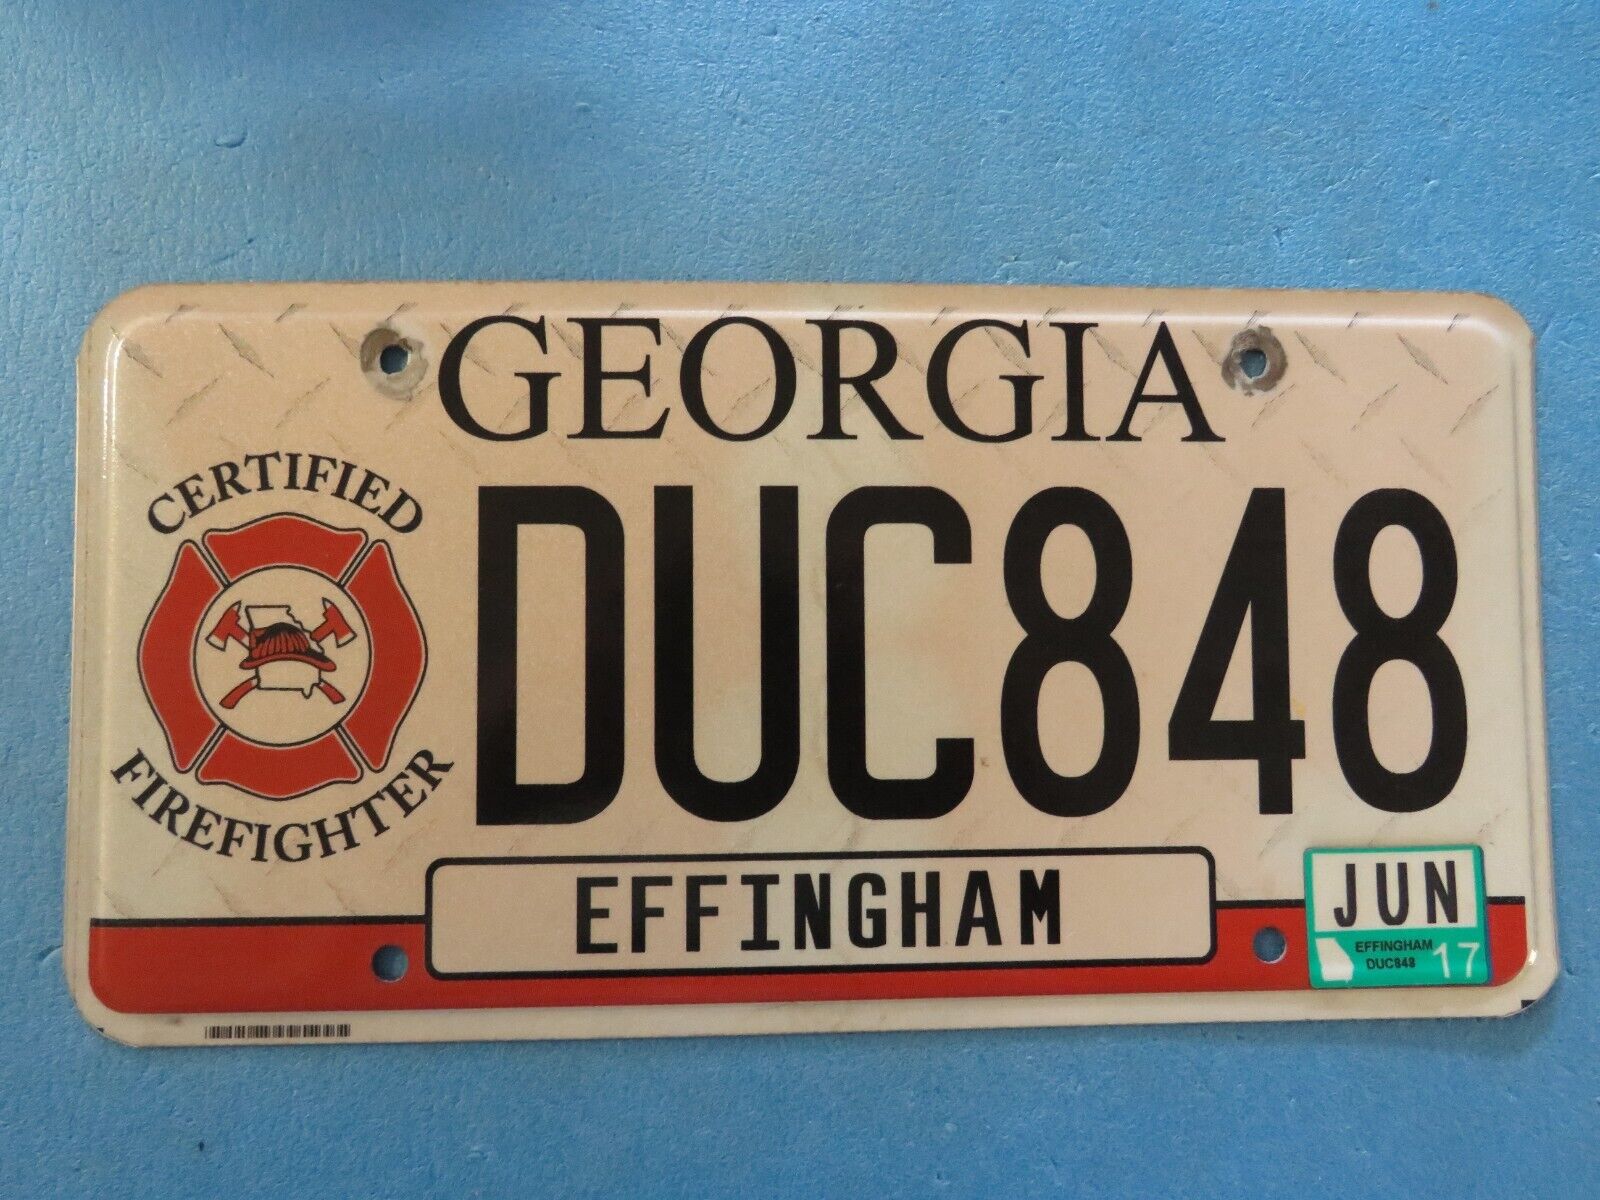 JUN 2017 Georgia Certified Firefighter License Plate DUC848 RARE RADAR # Fire